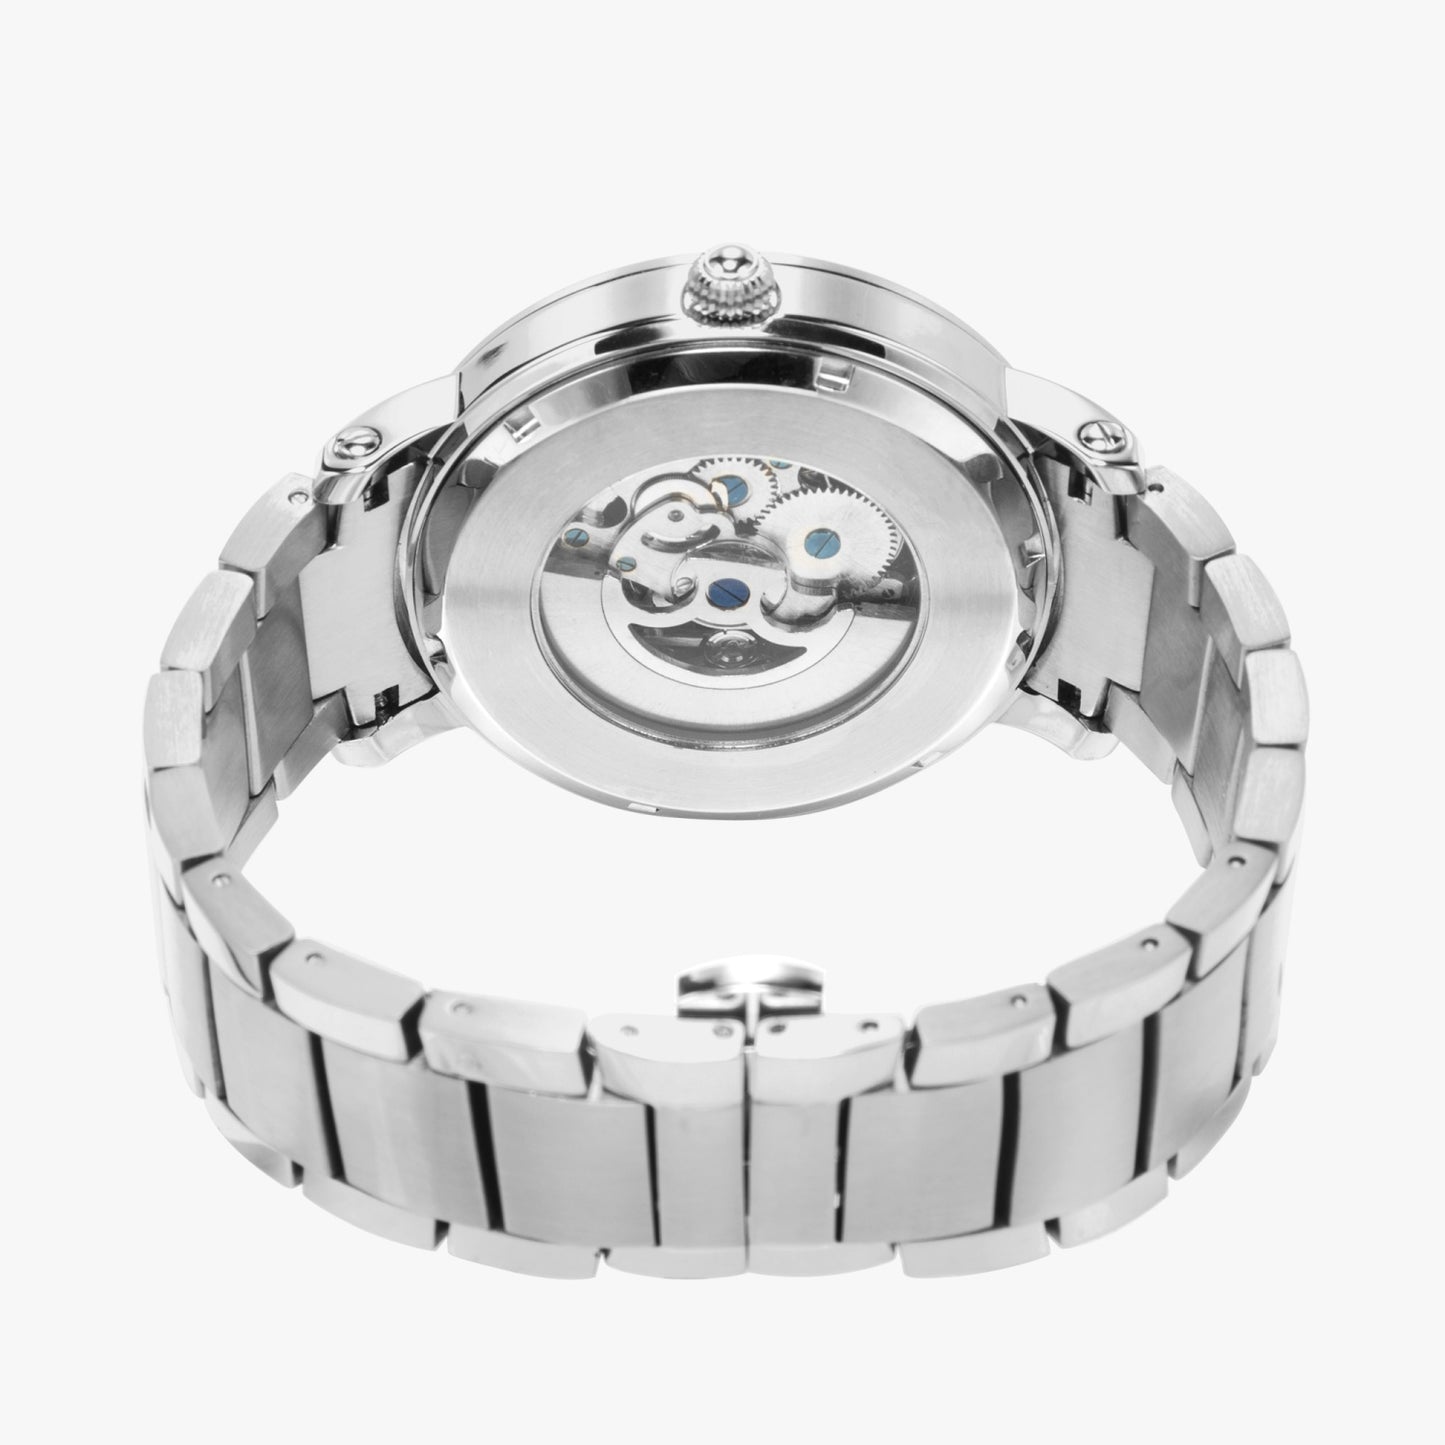 Torino Italia Automatic Movement Watch - Premium Stainless Steel